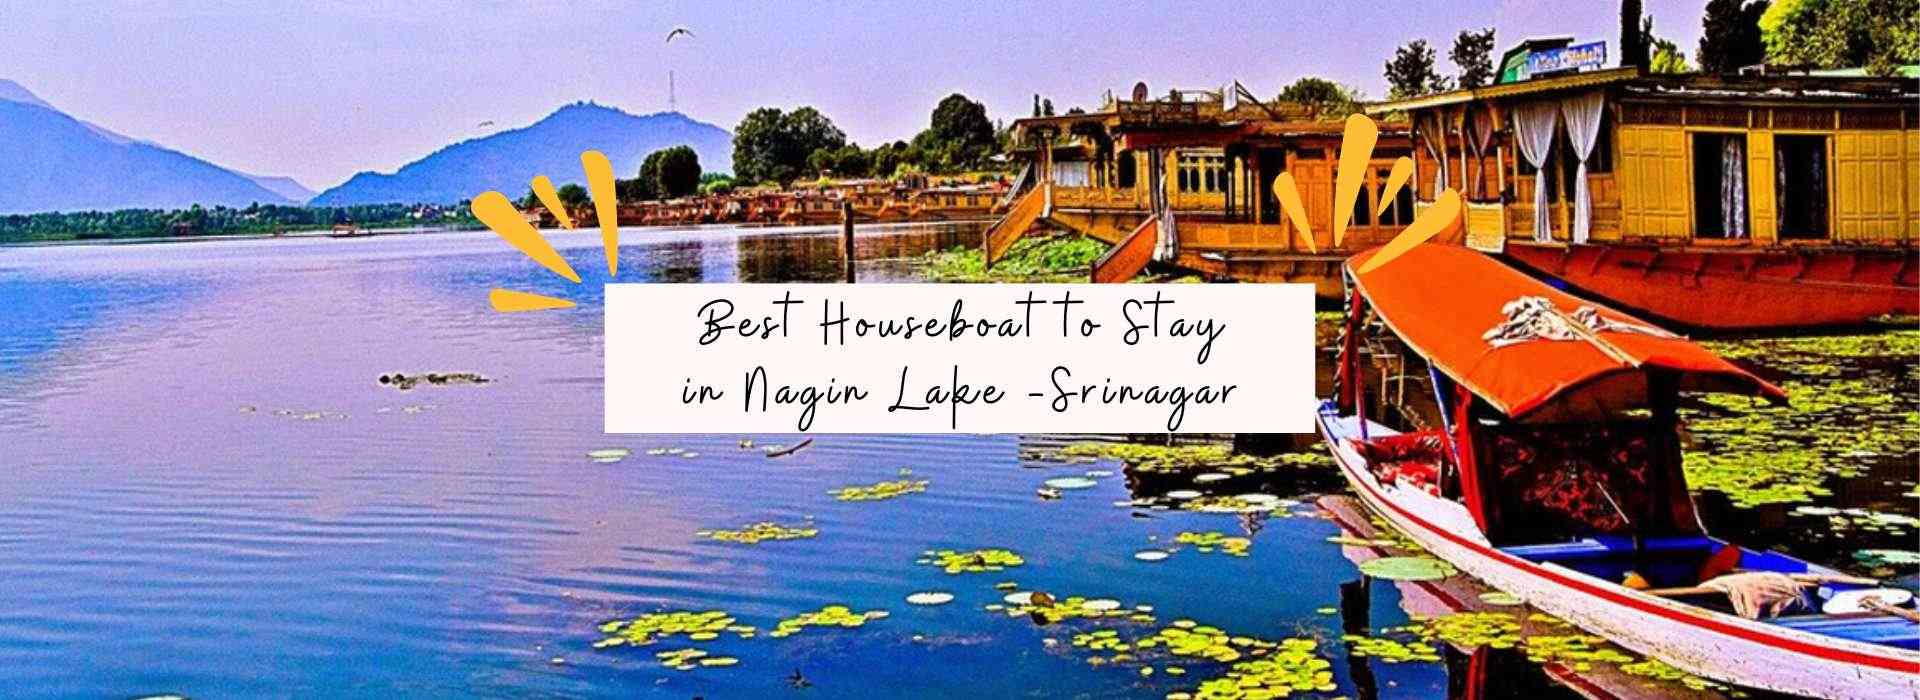 Best Houseboat to Stay in Nagin Lake -Srinagar kashmirhills.com